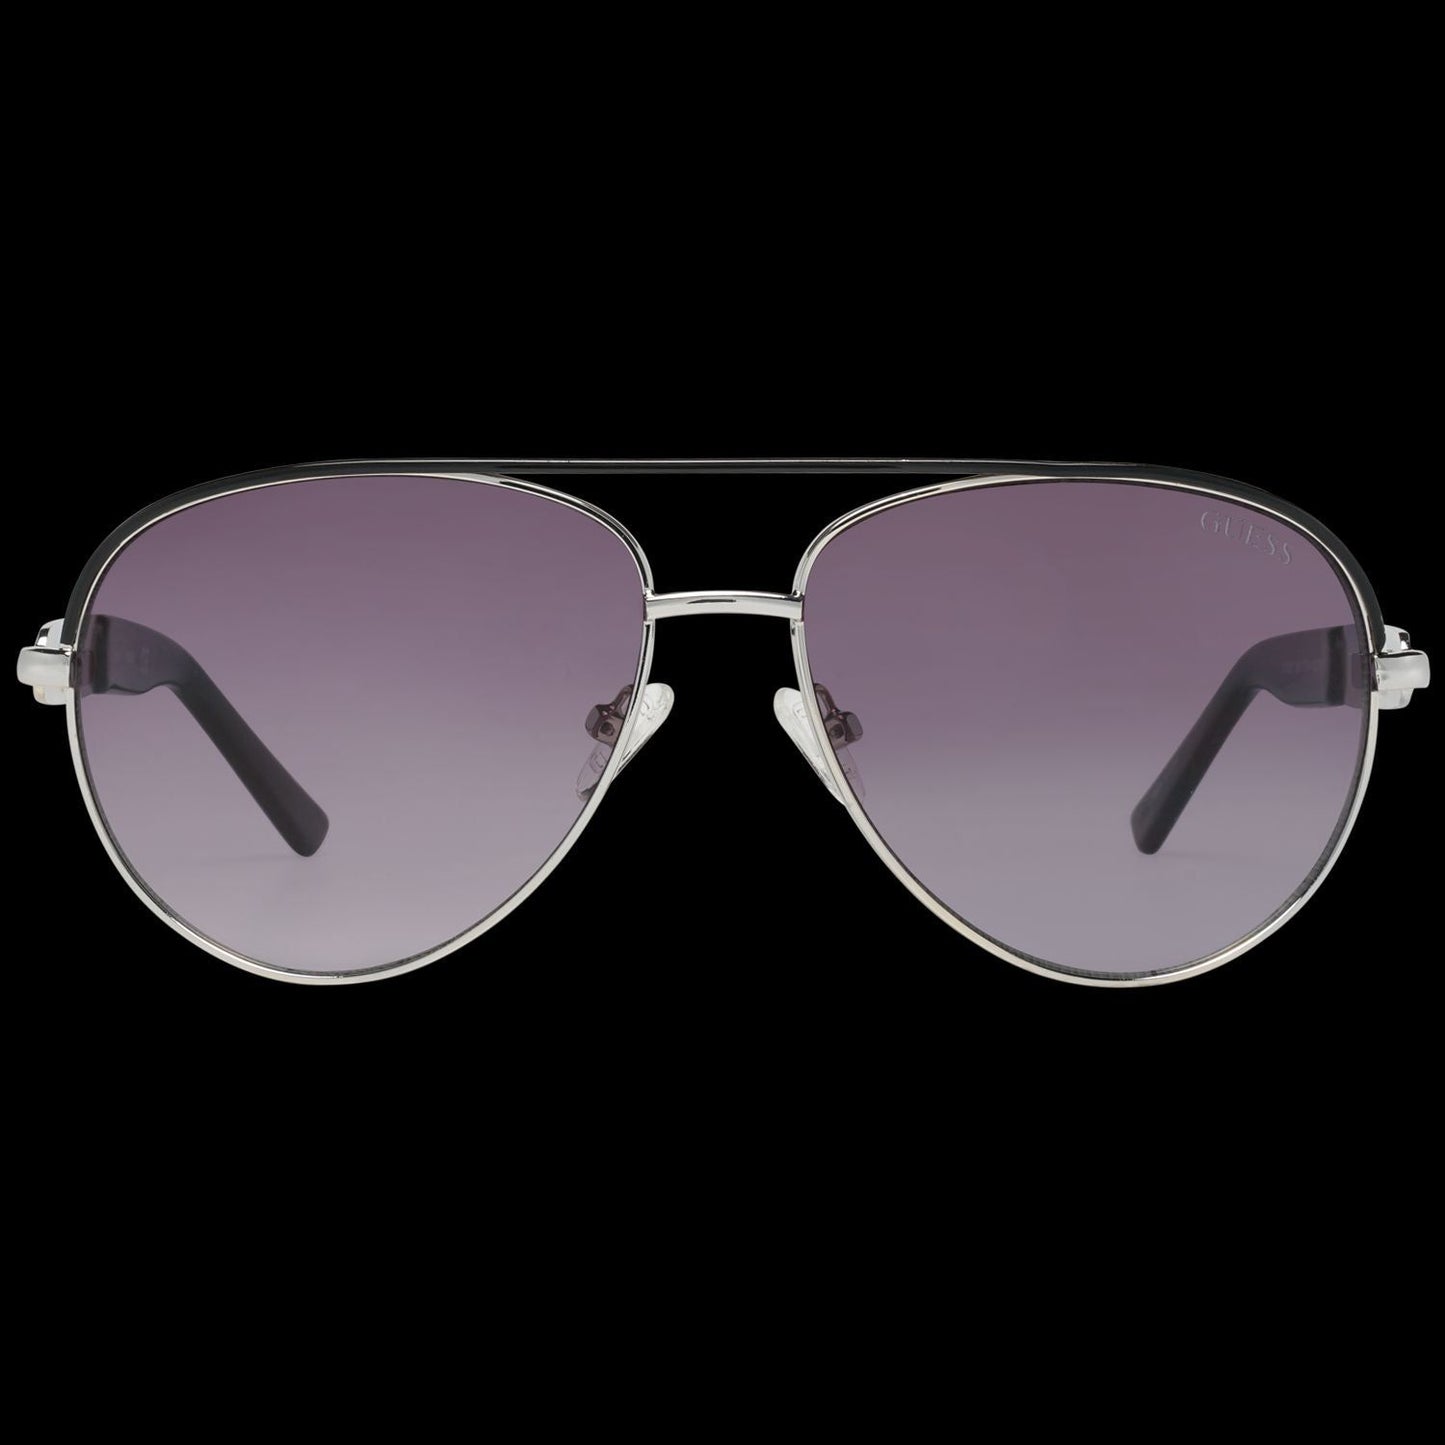 Guess Silver Women Sunglasses silver-women-sunglasses-36